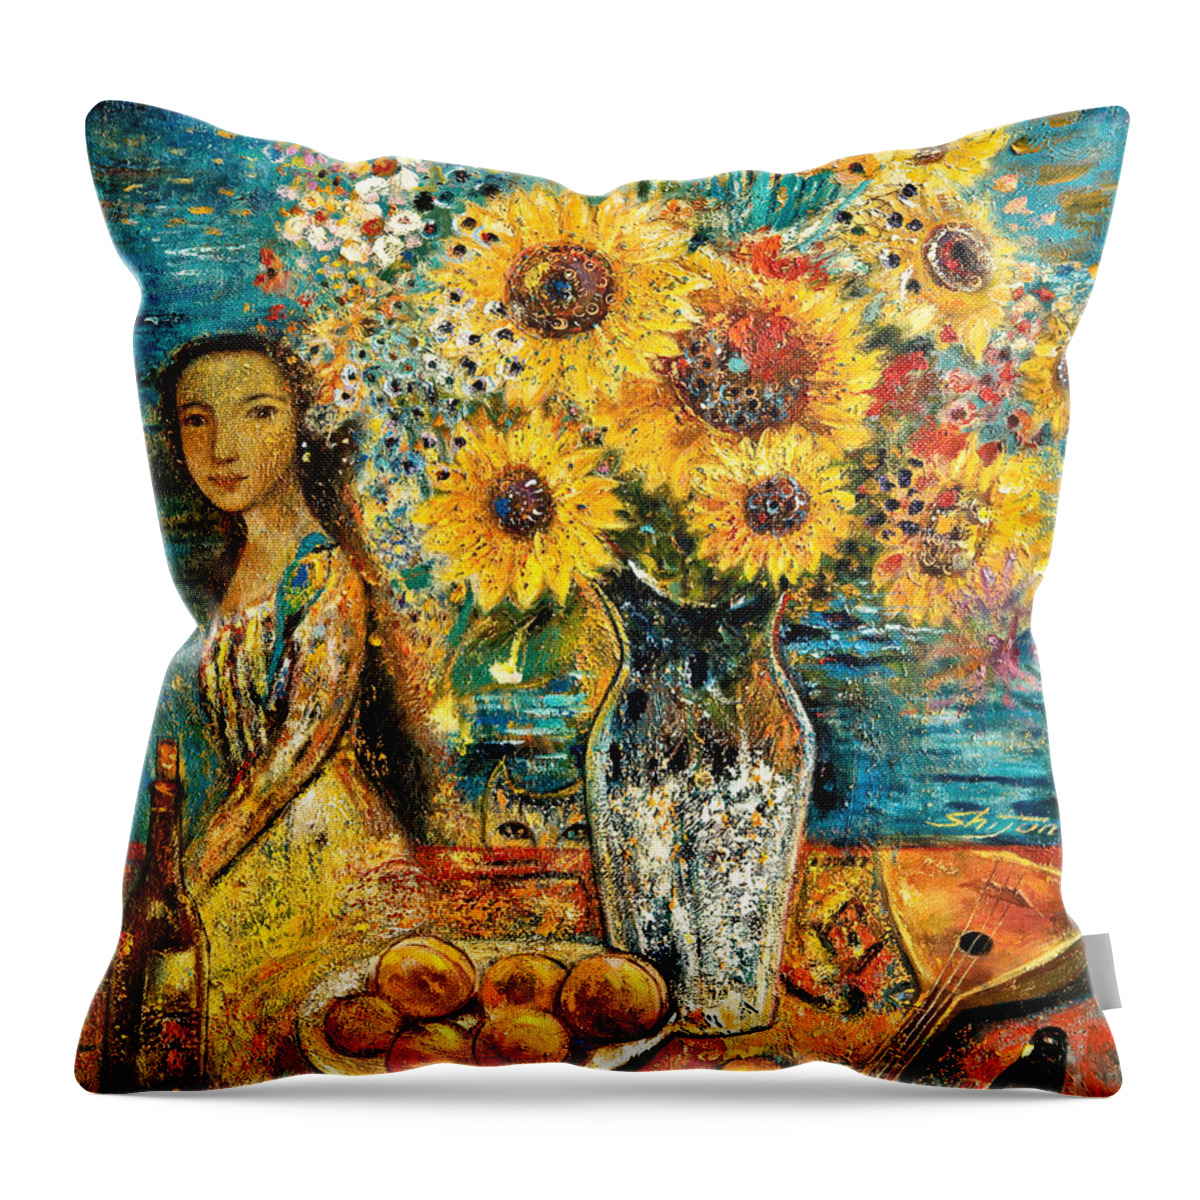 Shijun Throw Pillow featuring the painting Southern Sunshine by Shijun Munns